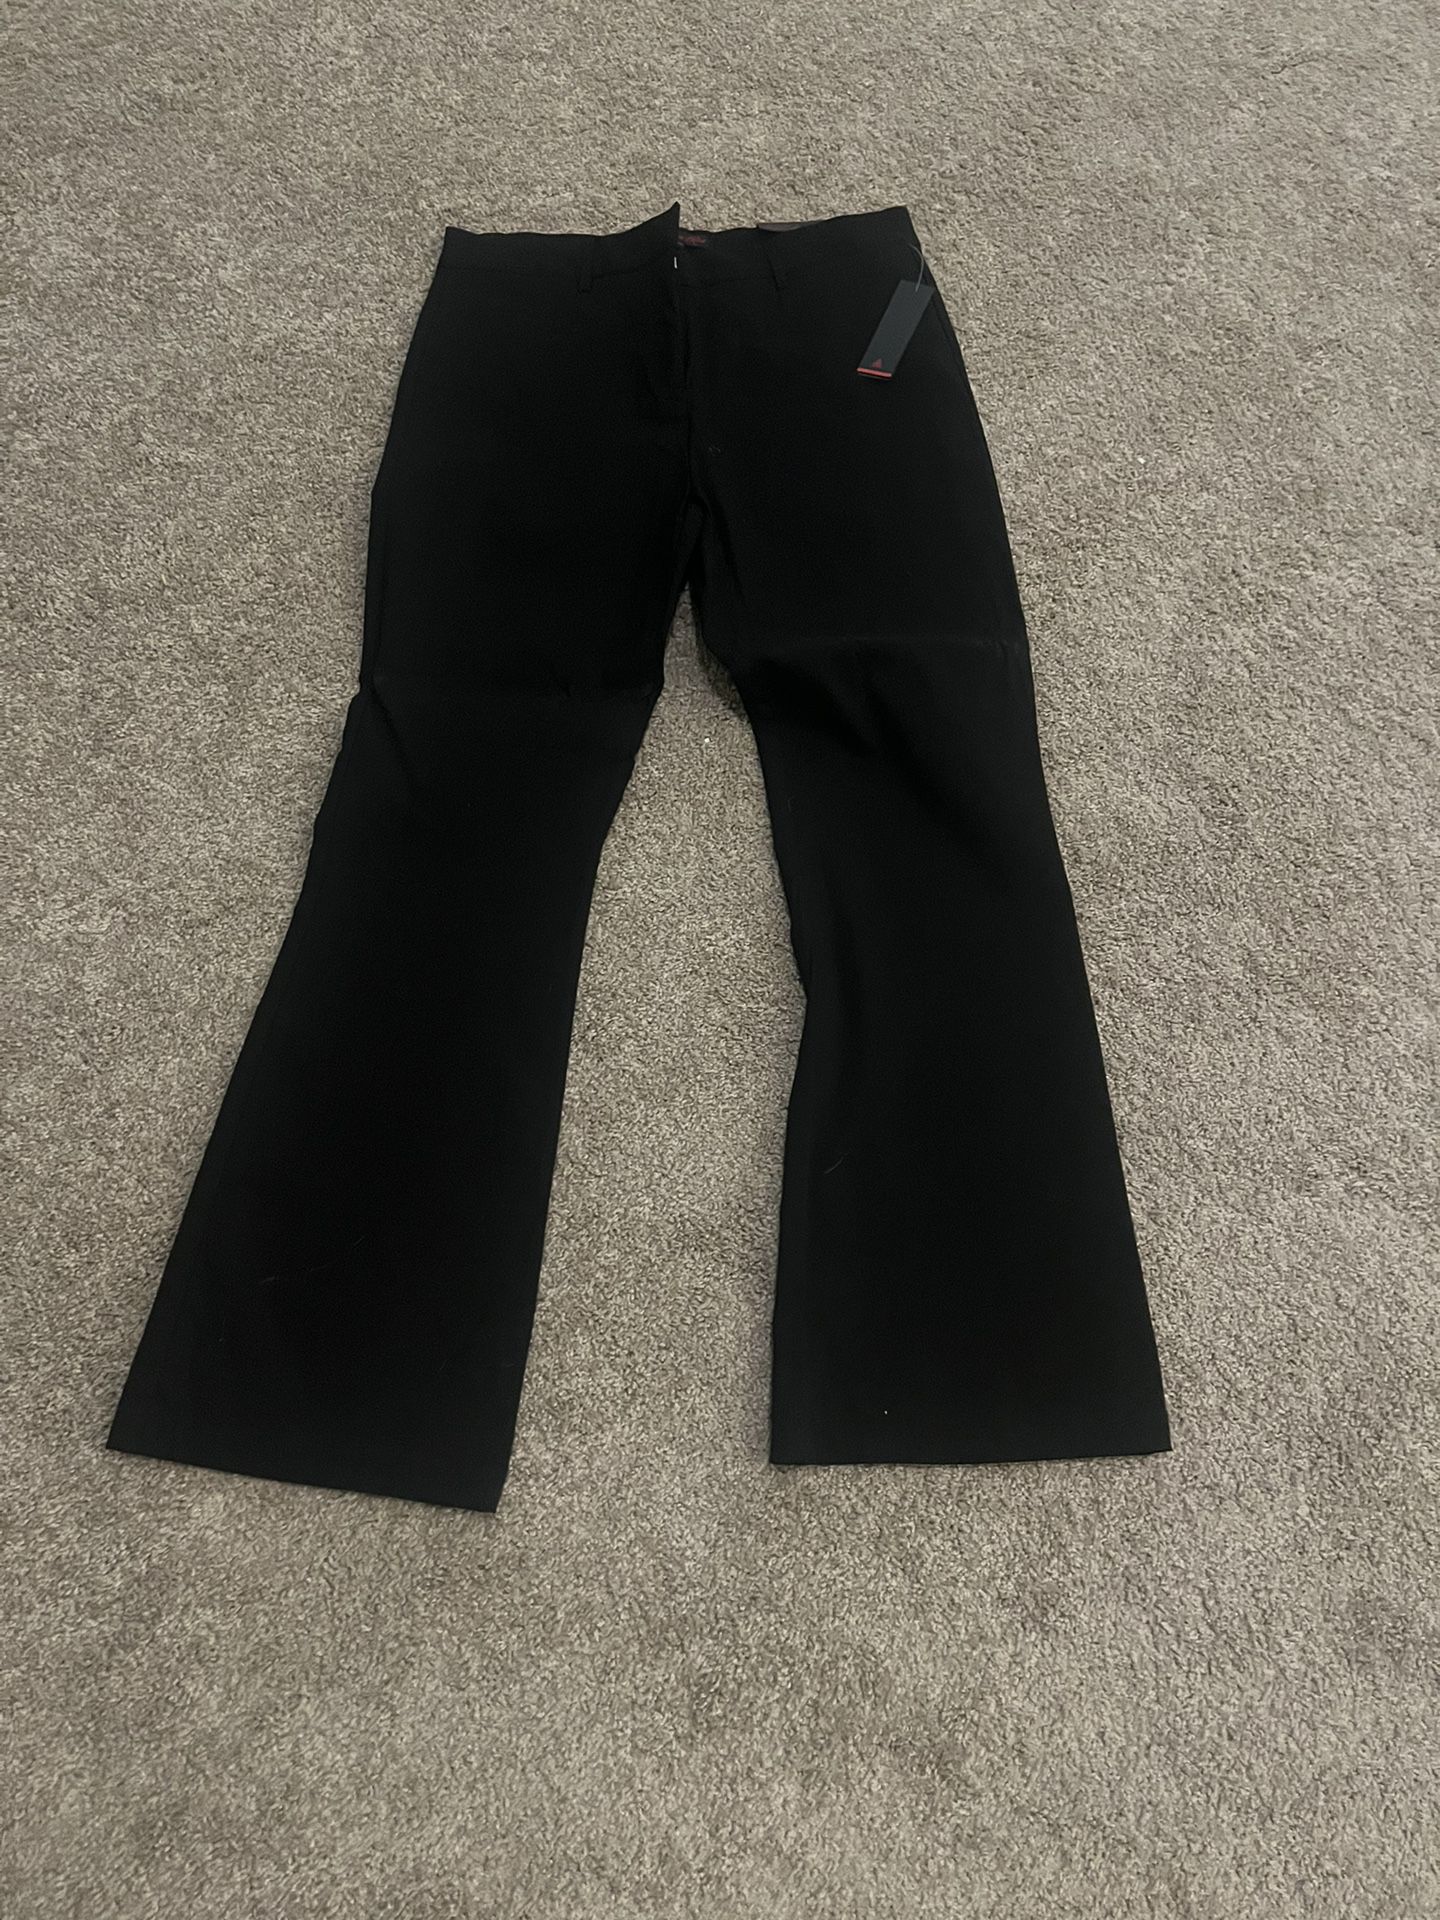 Brand New - Women’s Black Dress Pants Size 15/16